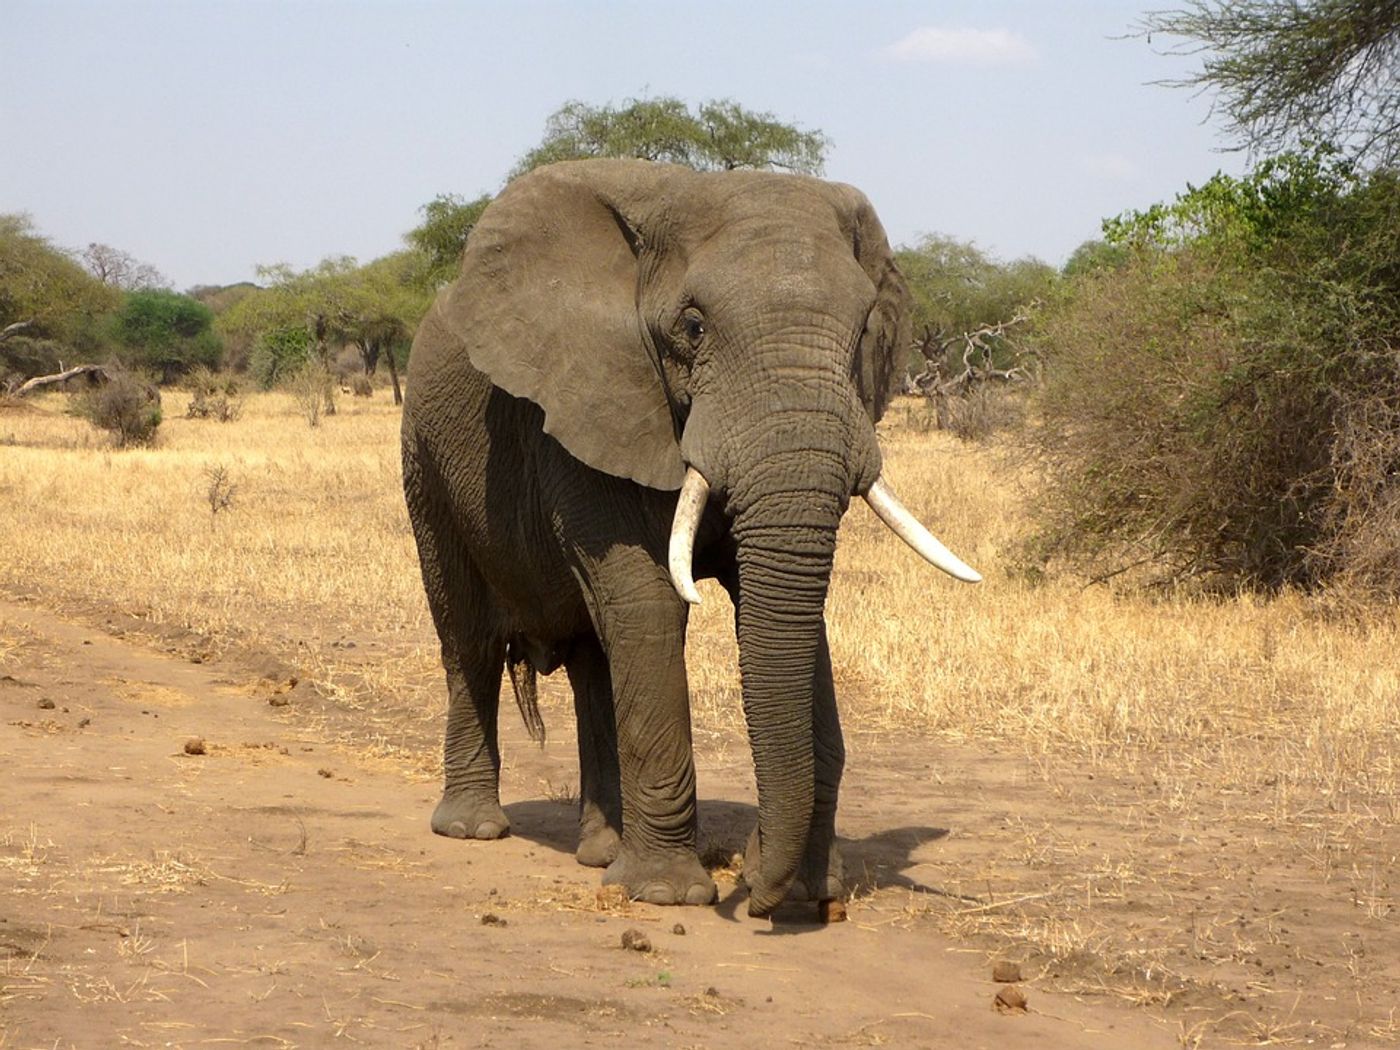 An elephant walking along a dirt road.